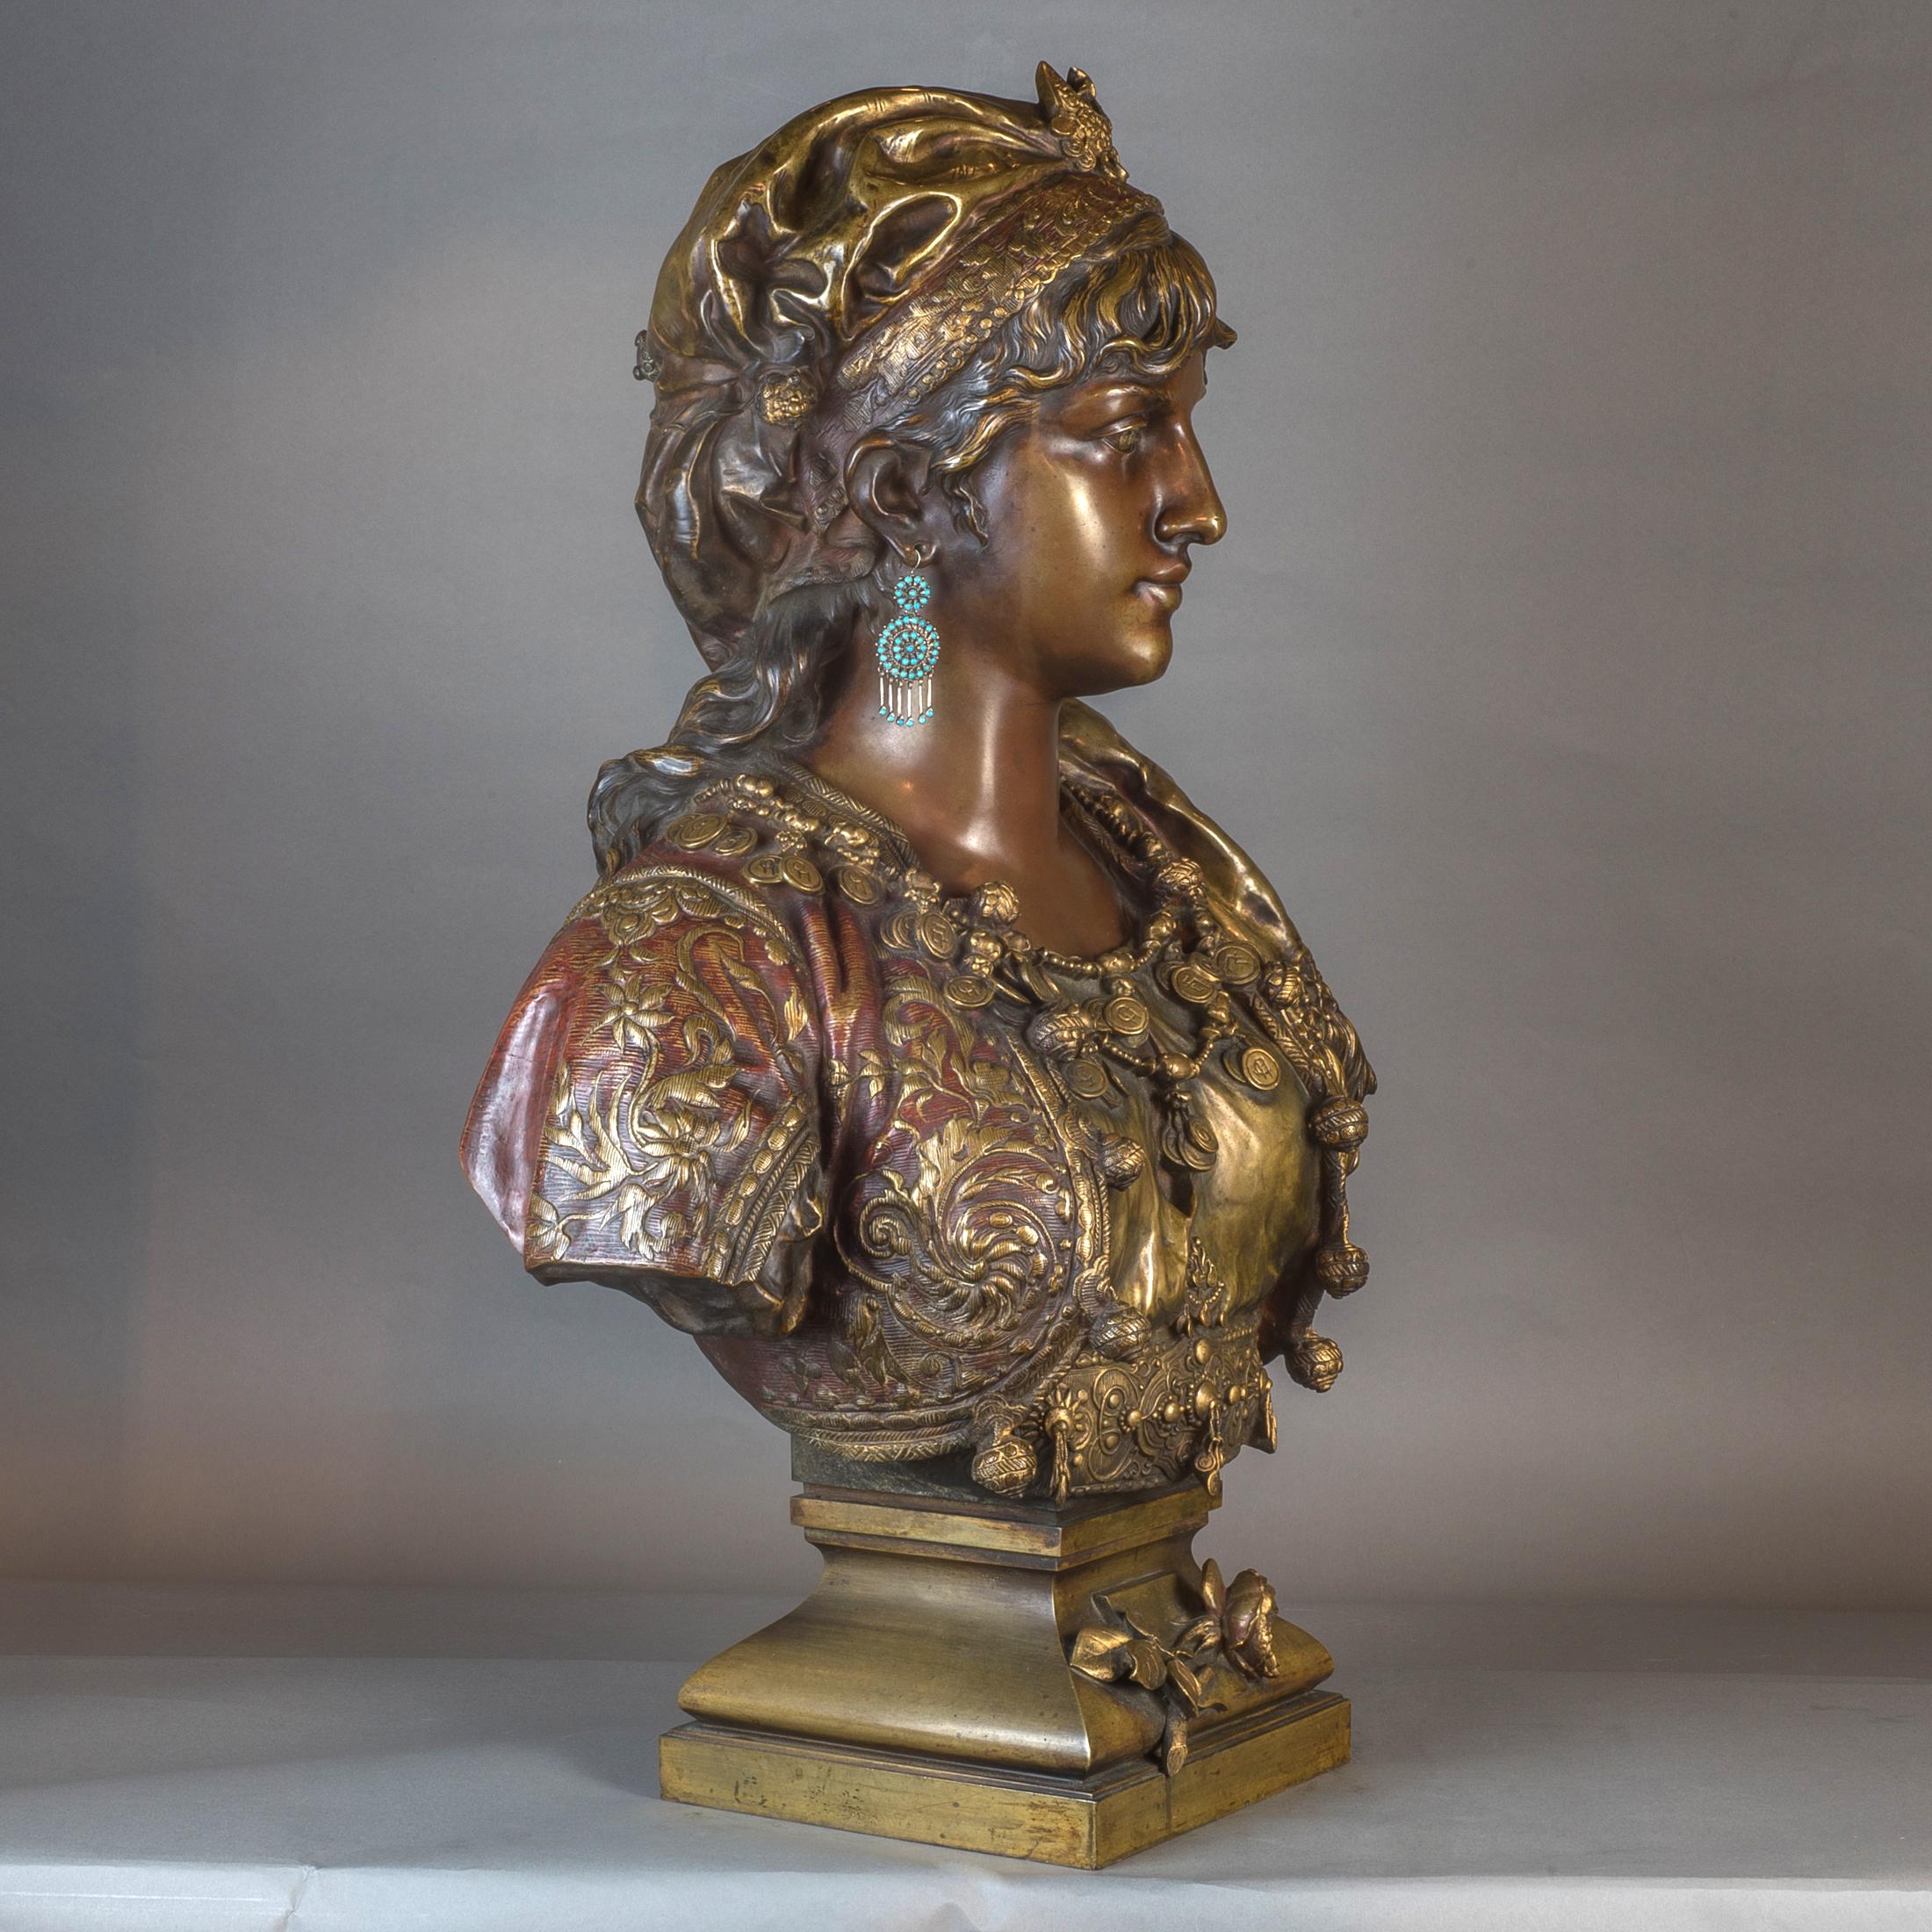 A Fine Etienne Gaudez Polychrome-Patinated Bronze Orientalist Bust - Gold Figurative Sculpture by Adrien-Etienne Gaudez